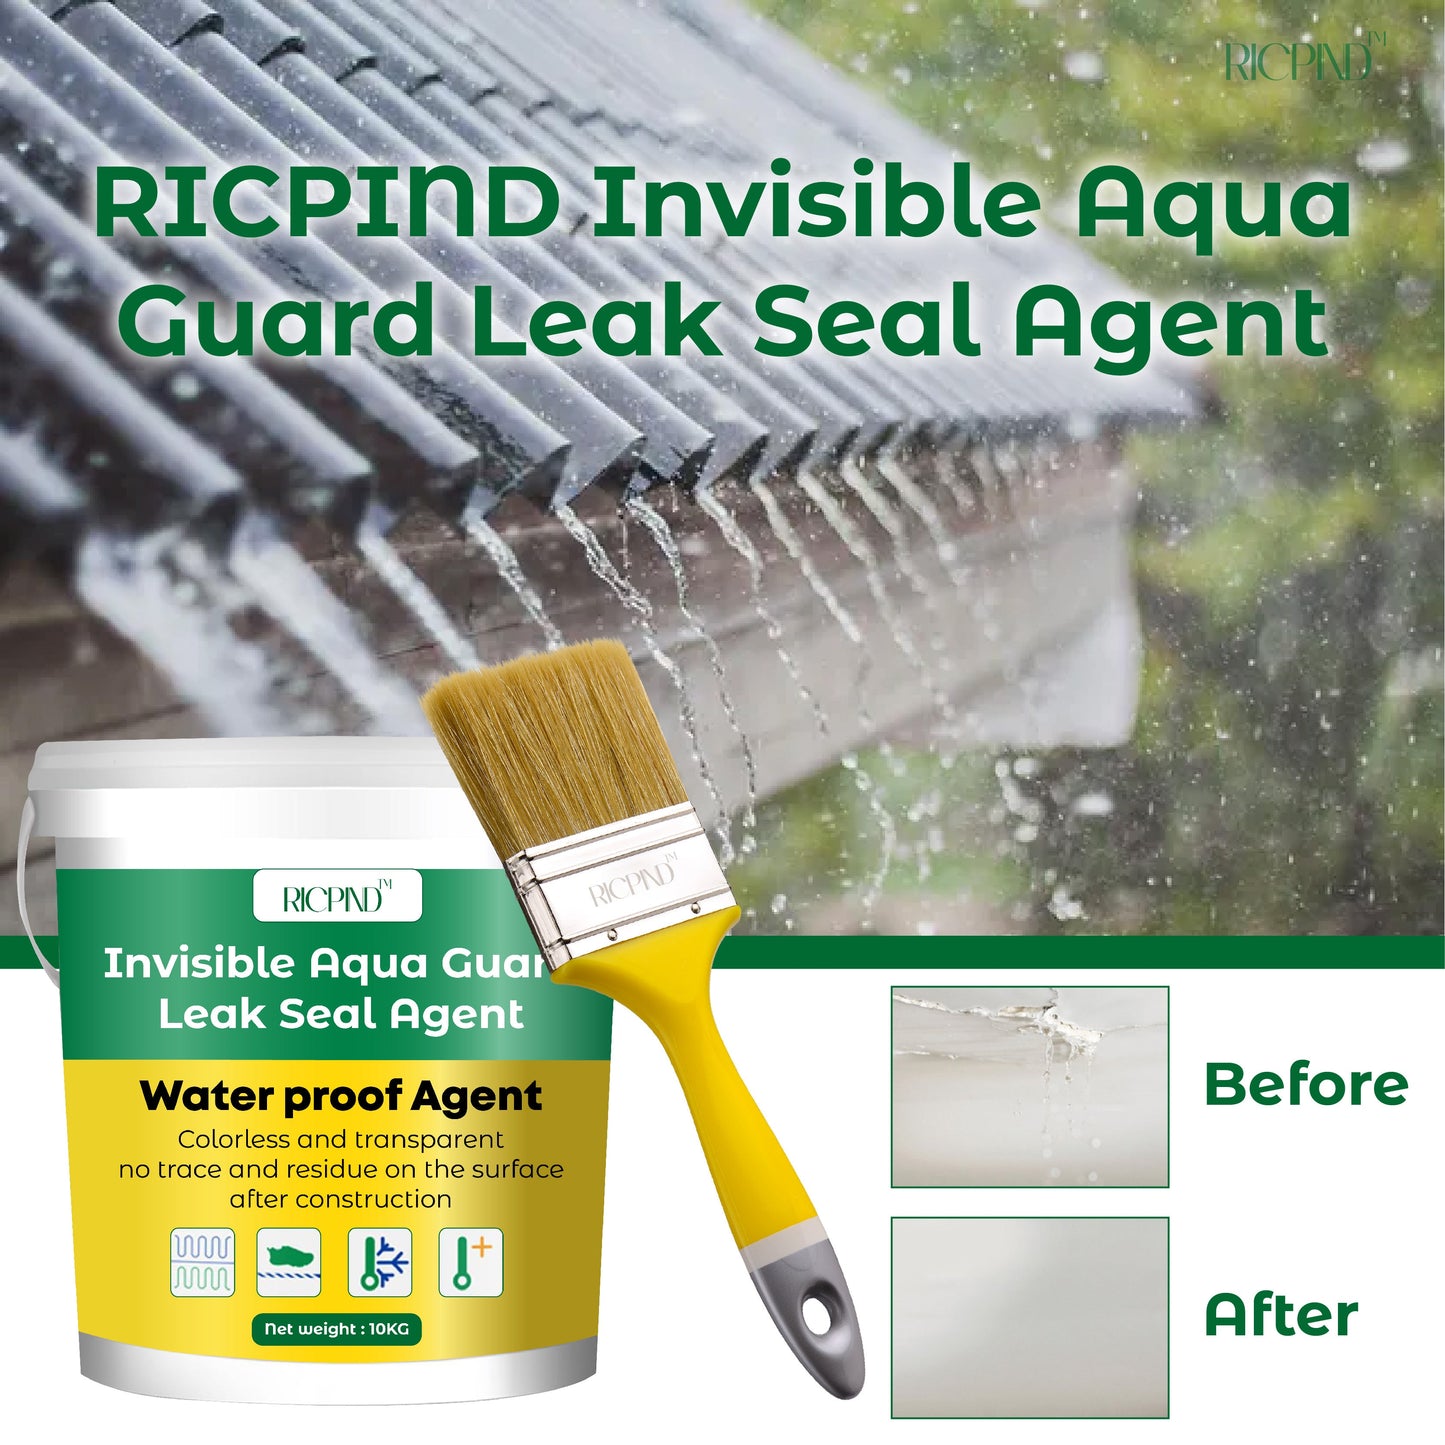 RICPIND Invisible Aqua Guard Leak Seal Agent